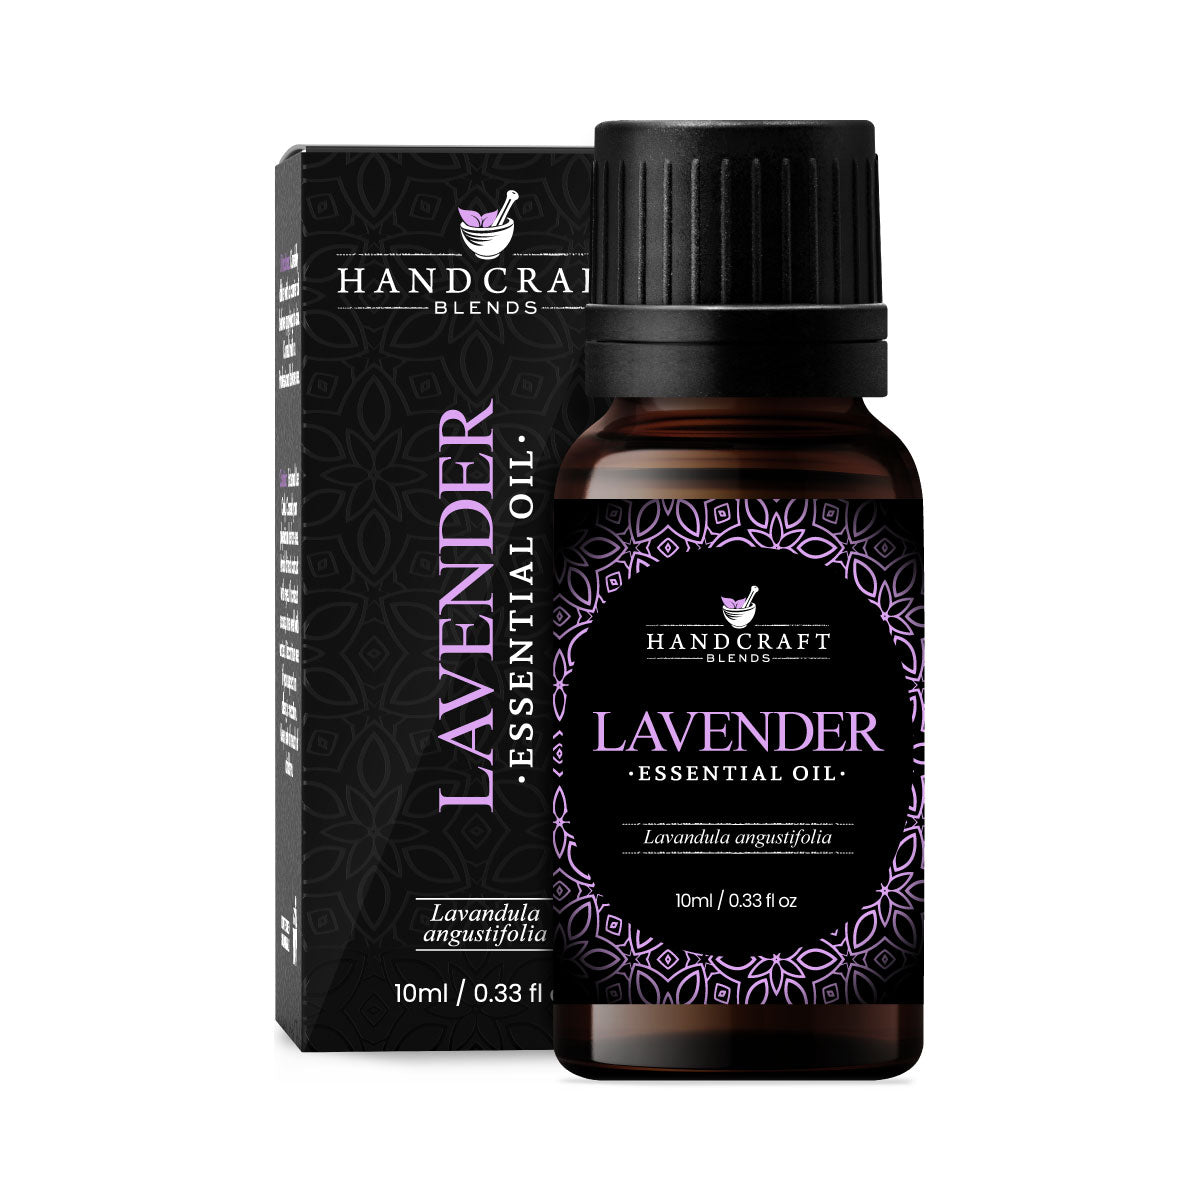 Handcraft Lavender Essential Oil - 100% Pure & Natural – Premium Therapeutic Grade with Premium Glass Dropper - Huge 4 fl.oz